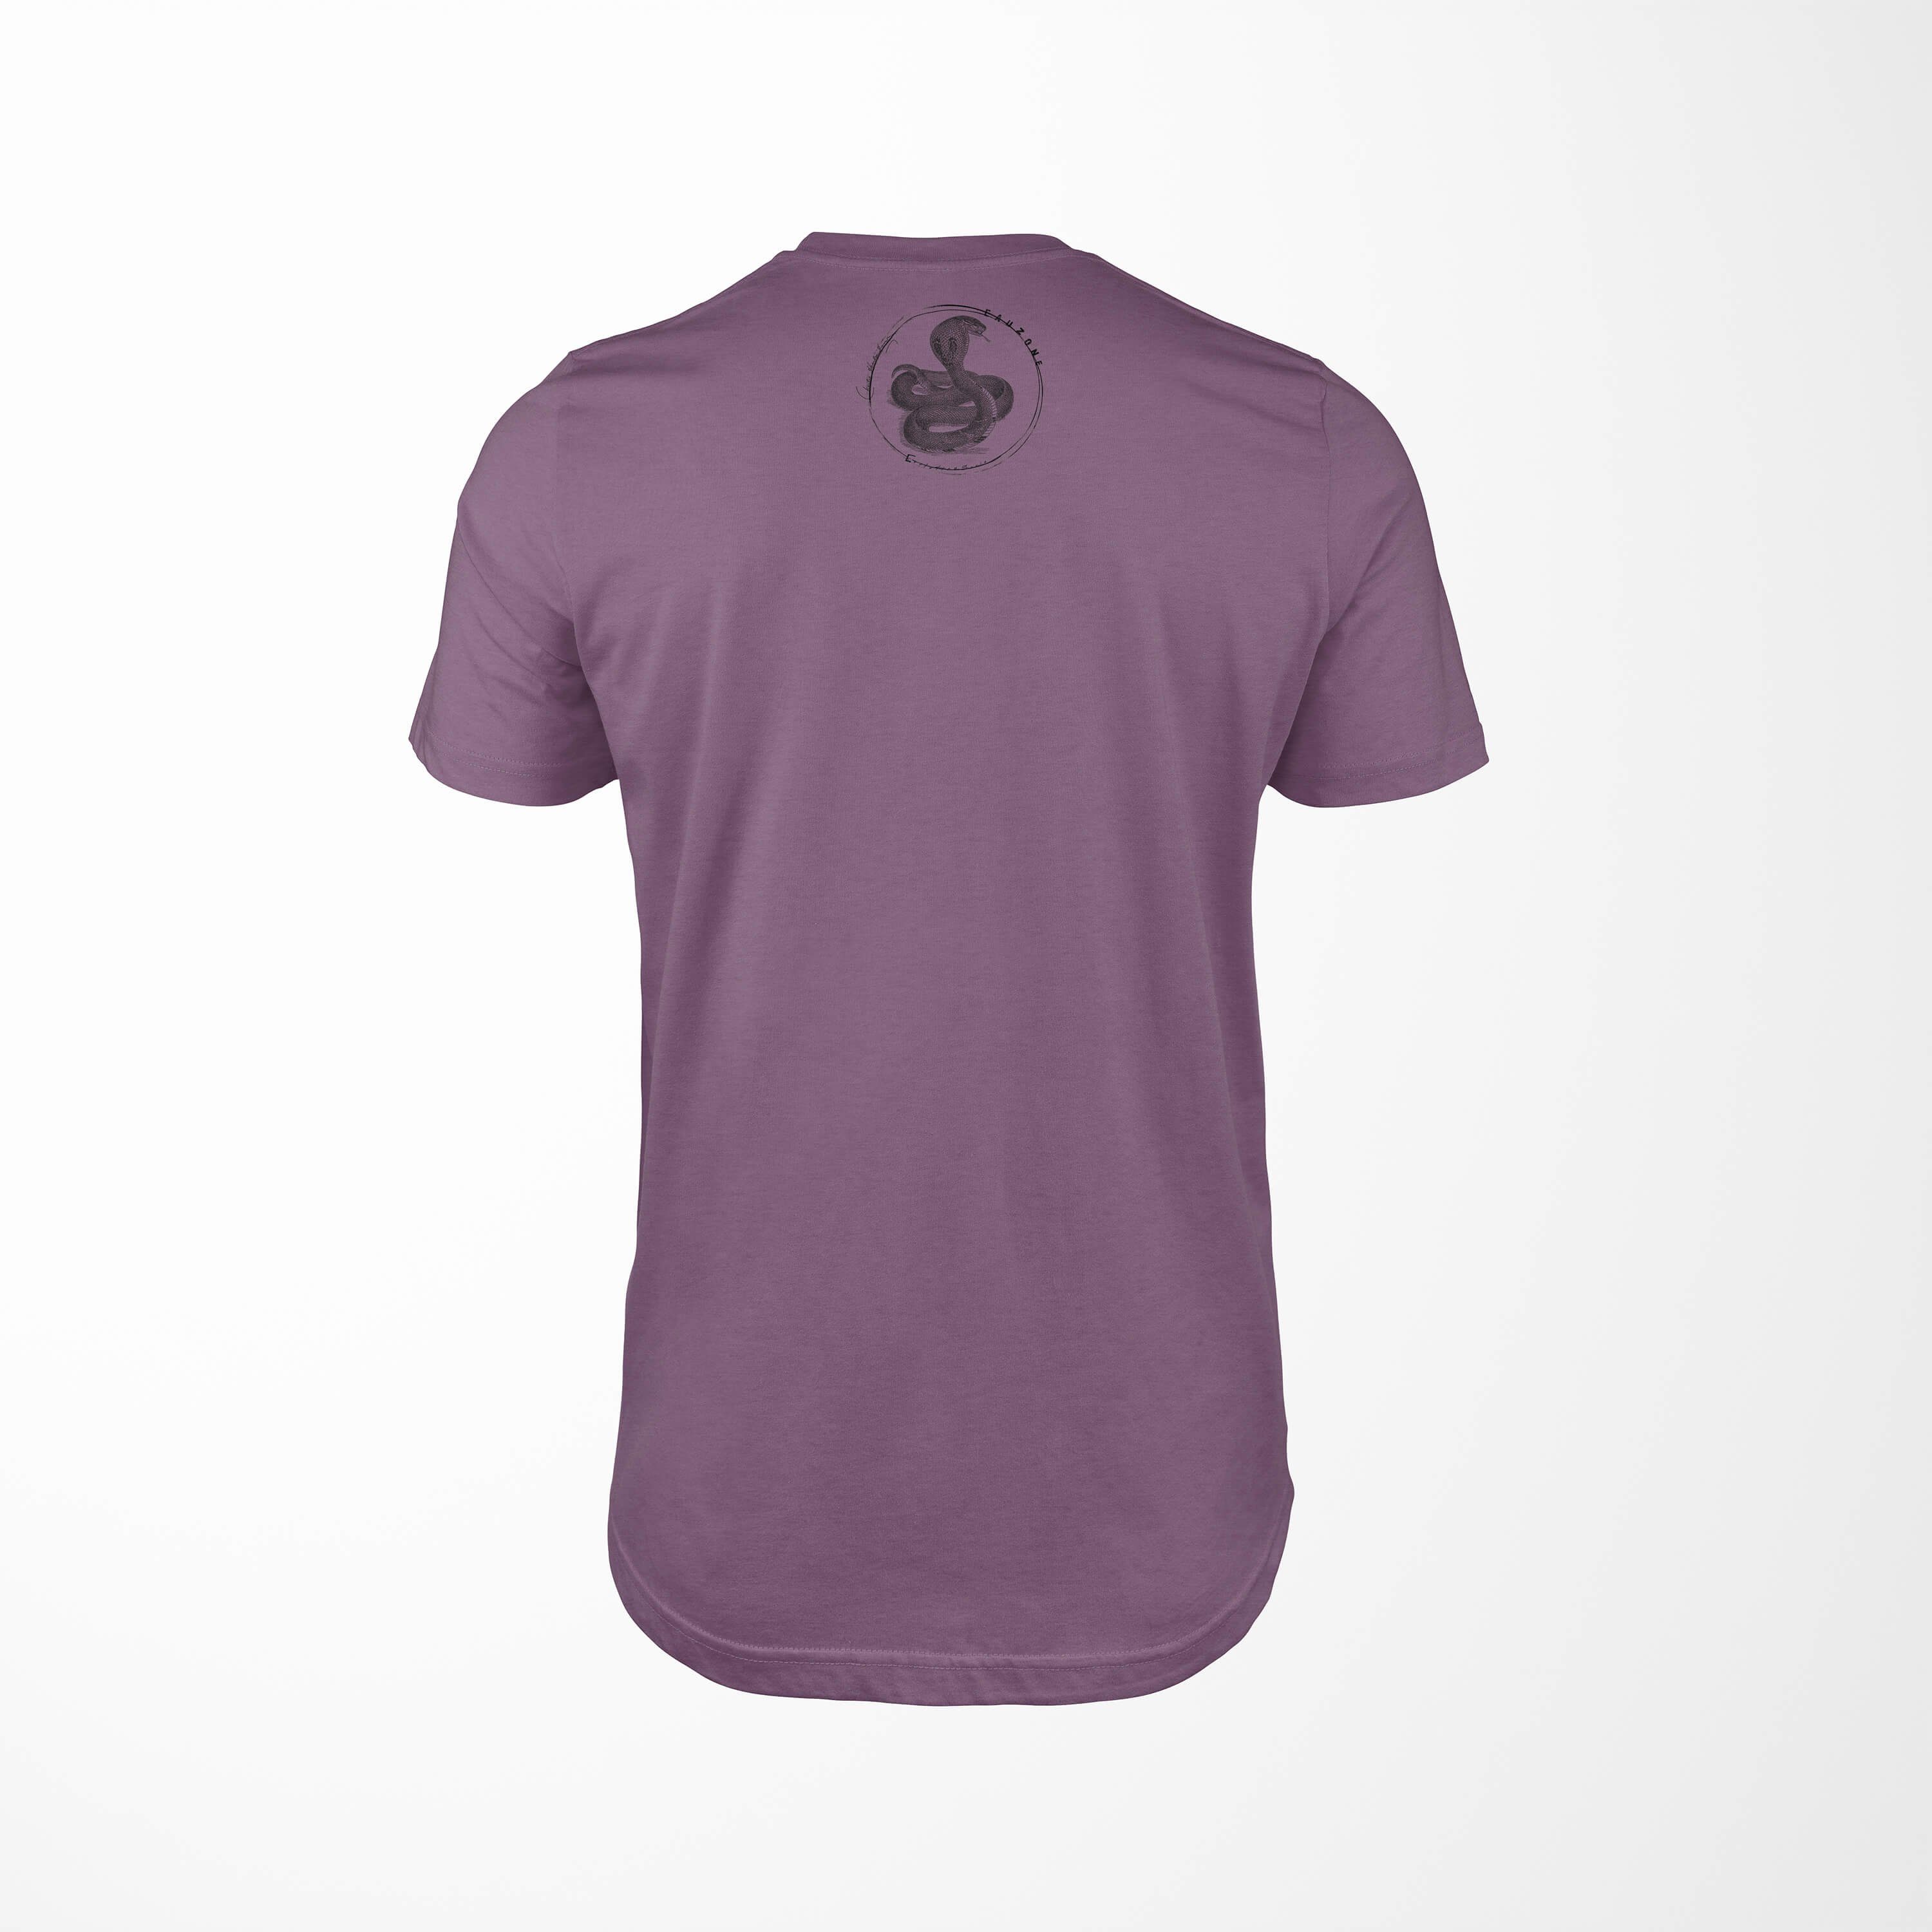 Sinus Art Shiraz Herren Evolution T-Shirt Kobra T-Shirt